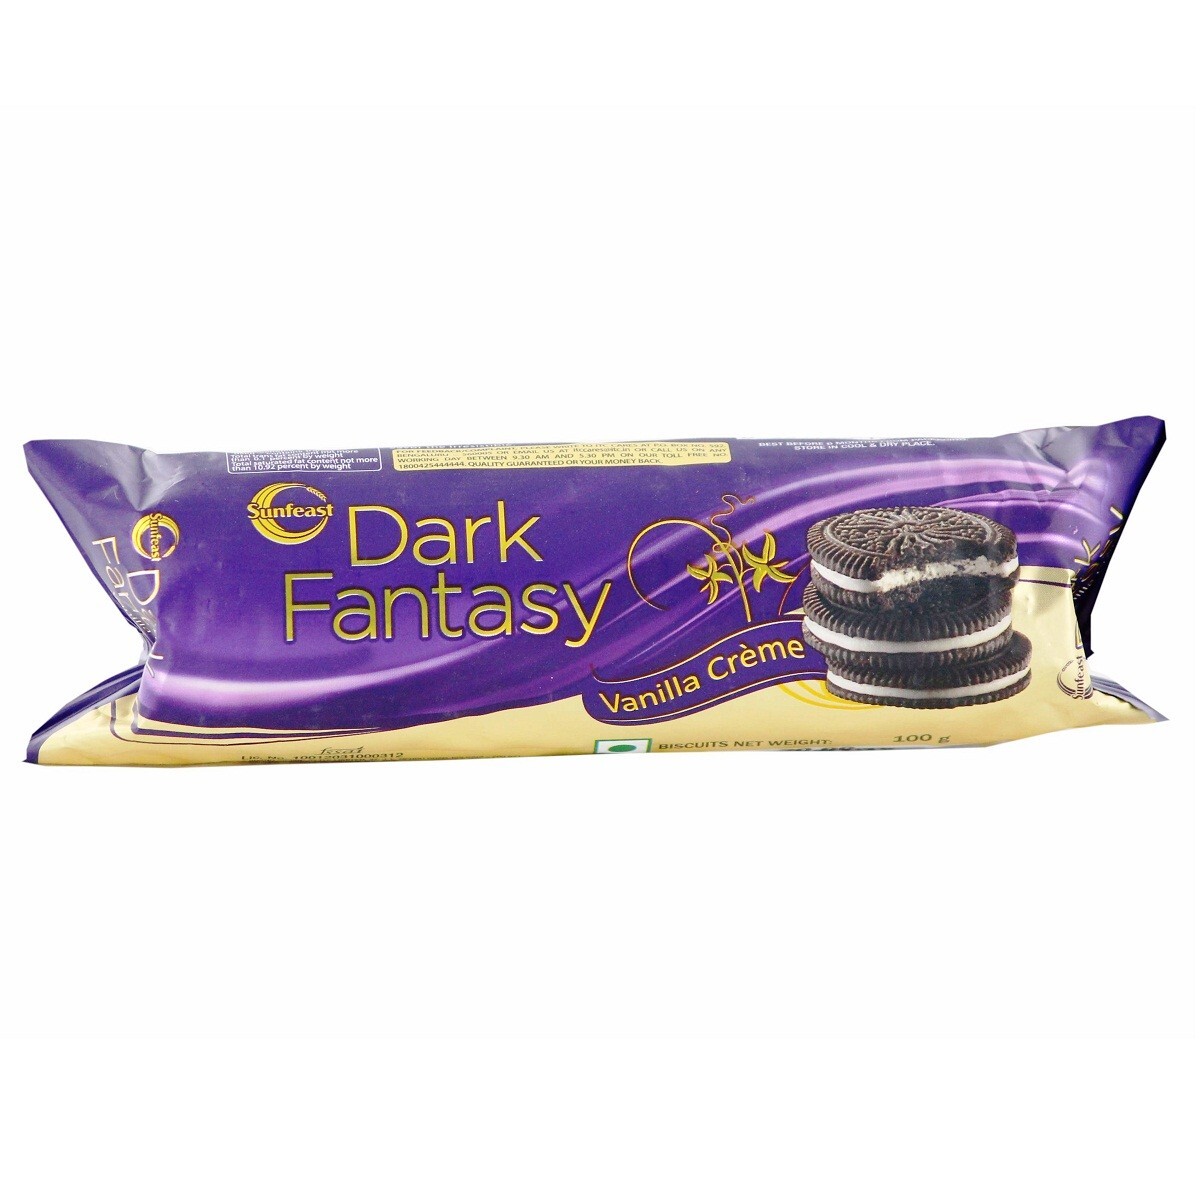 Sunfeast Dark Fantasy Vanilla Creme 92.5g